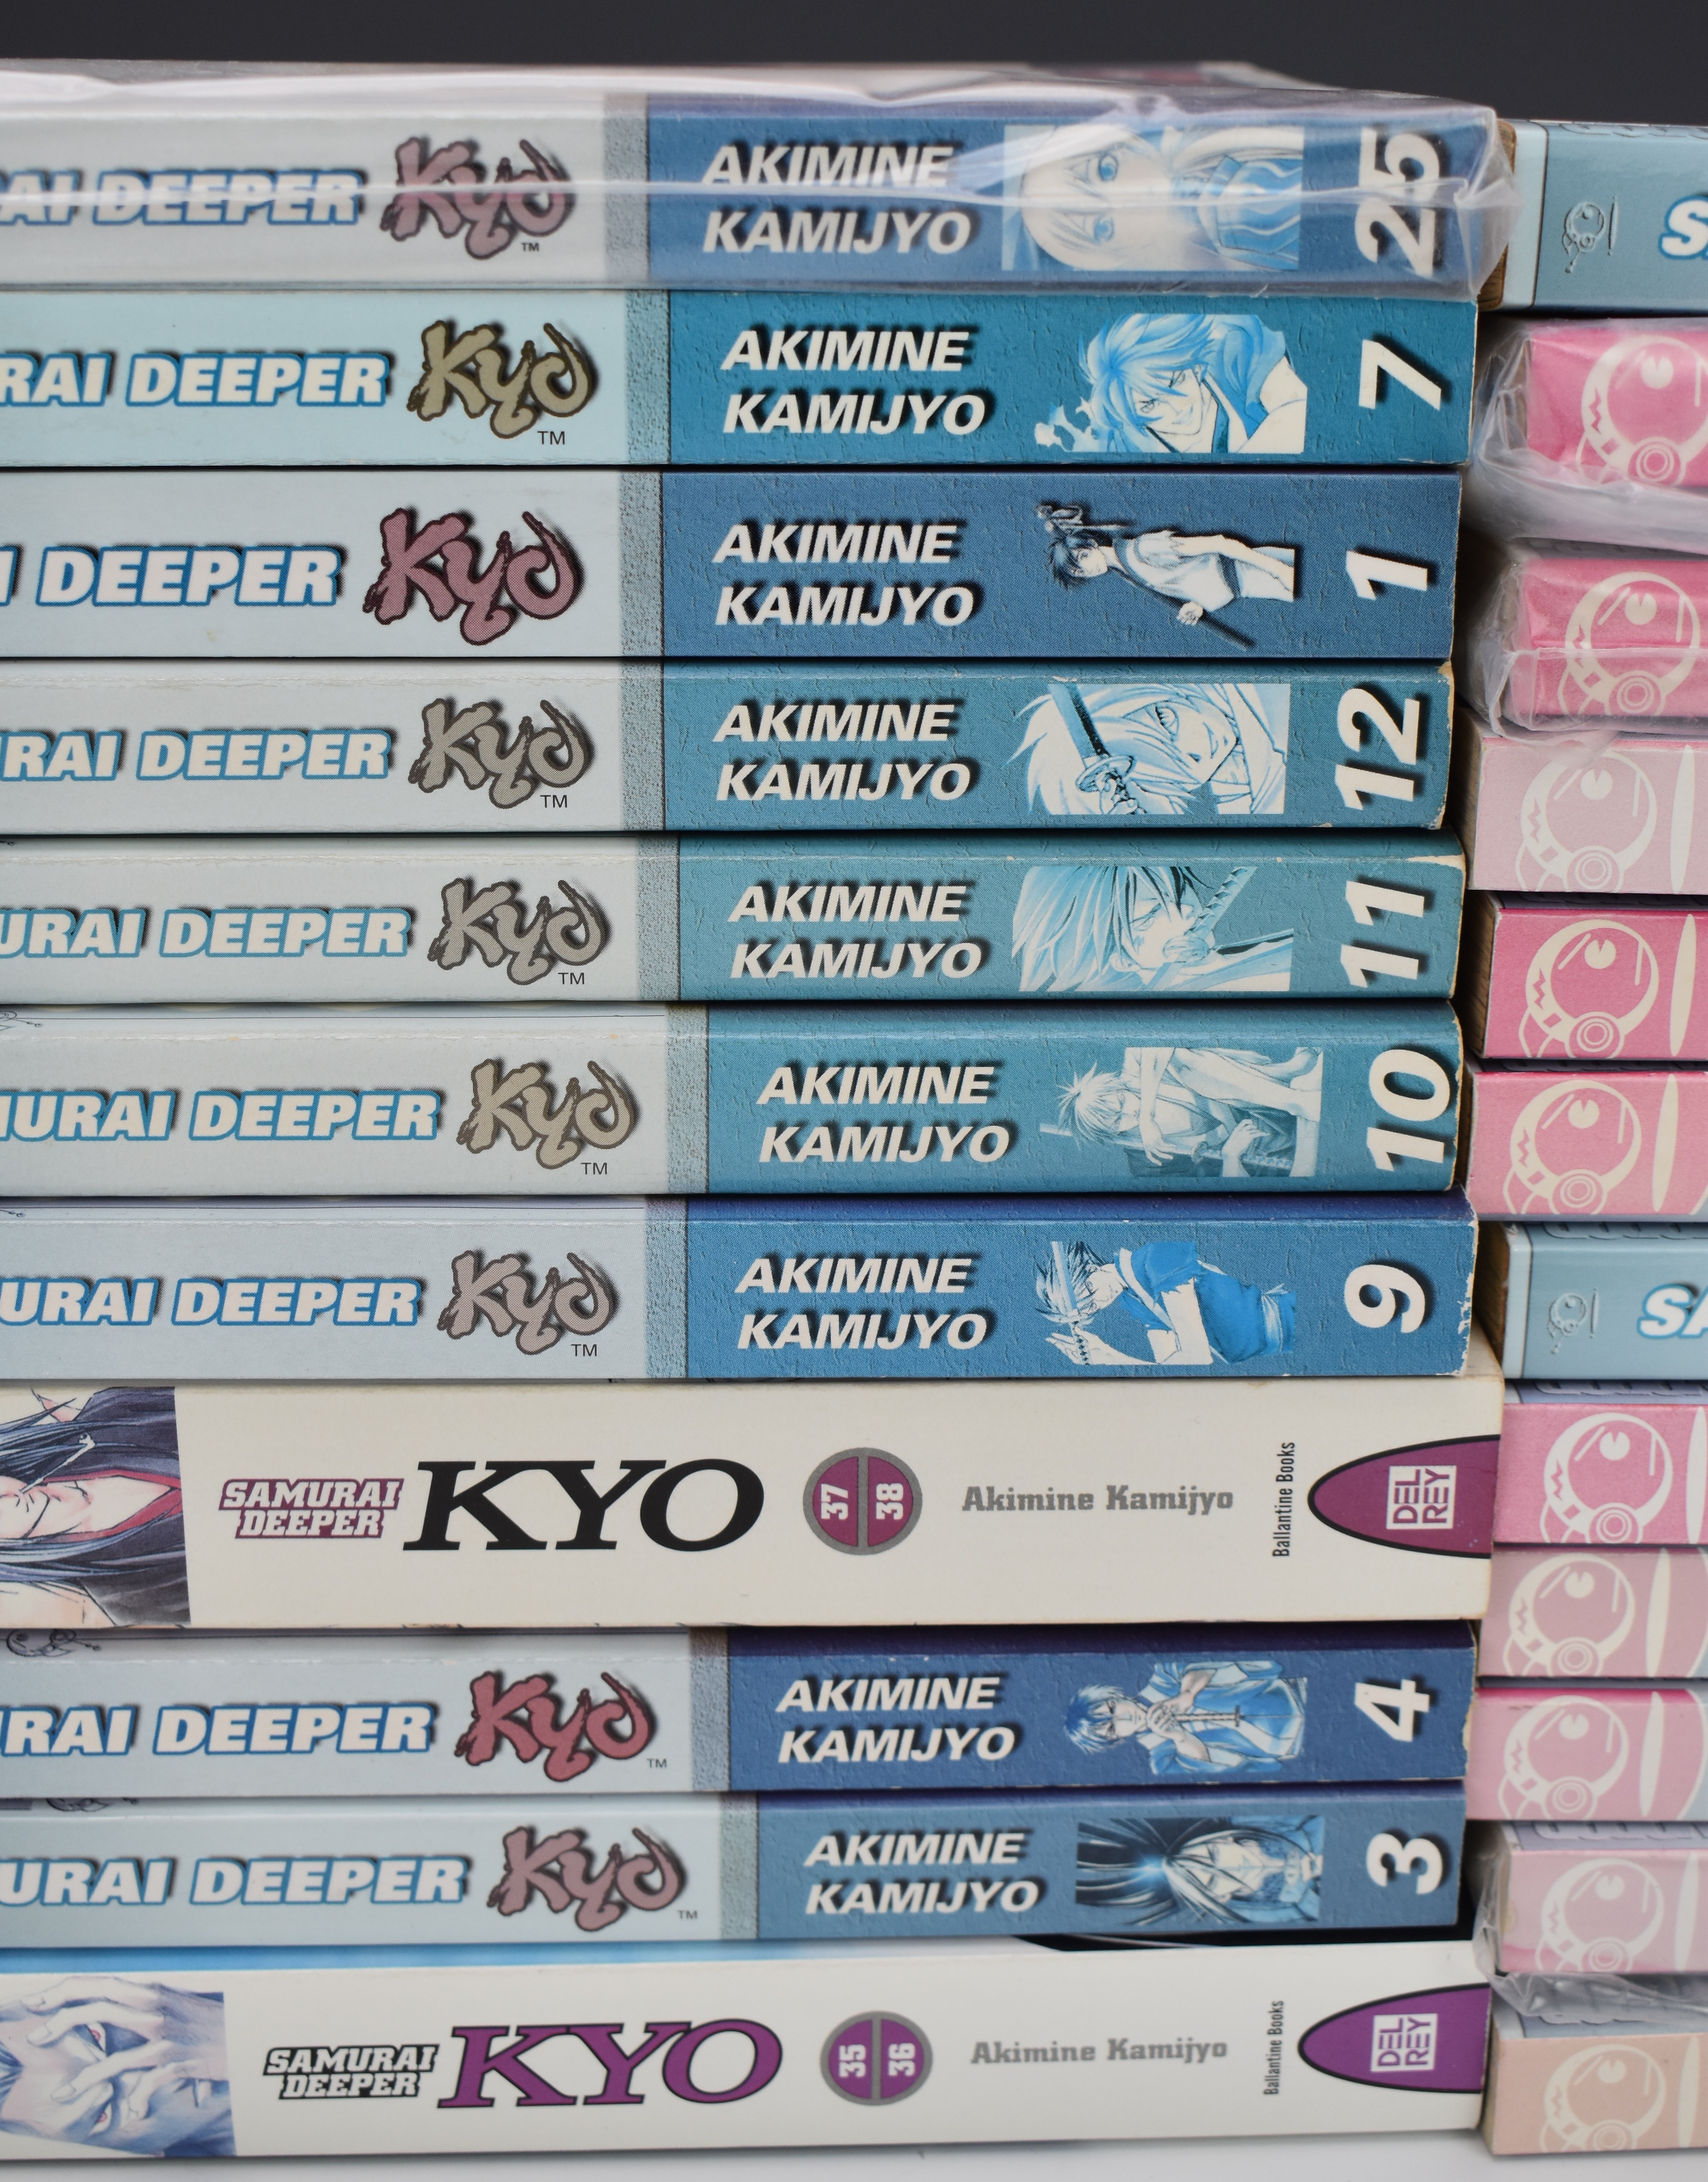 Samurai Deeper Kyo Manga comic book volumes 1-38 by Akimine Kamijyo published by Del Rey. - Image 3 of 6